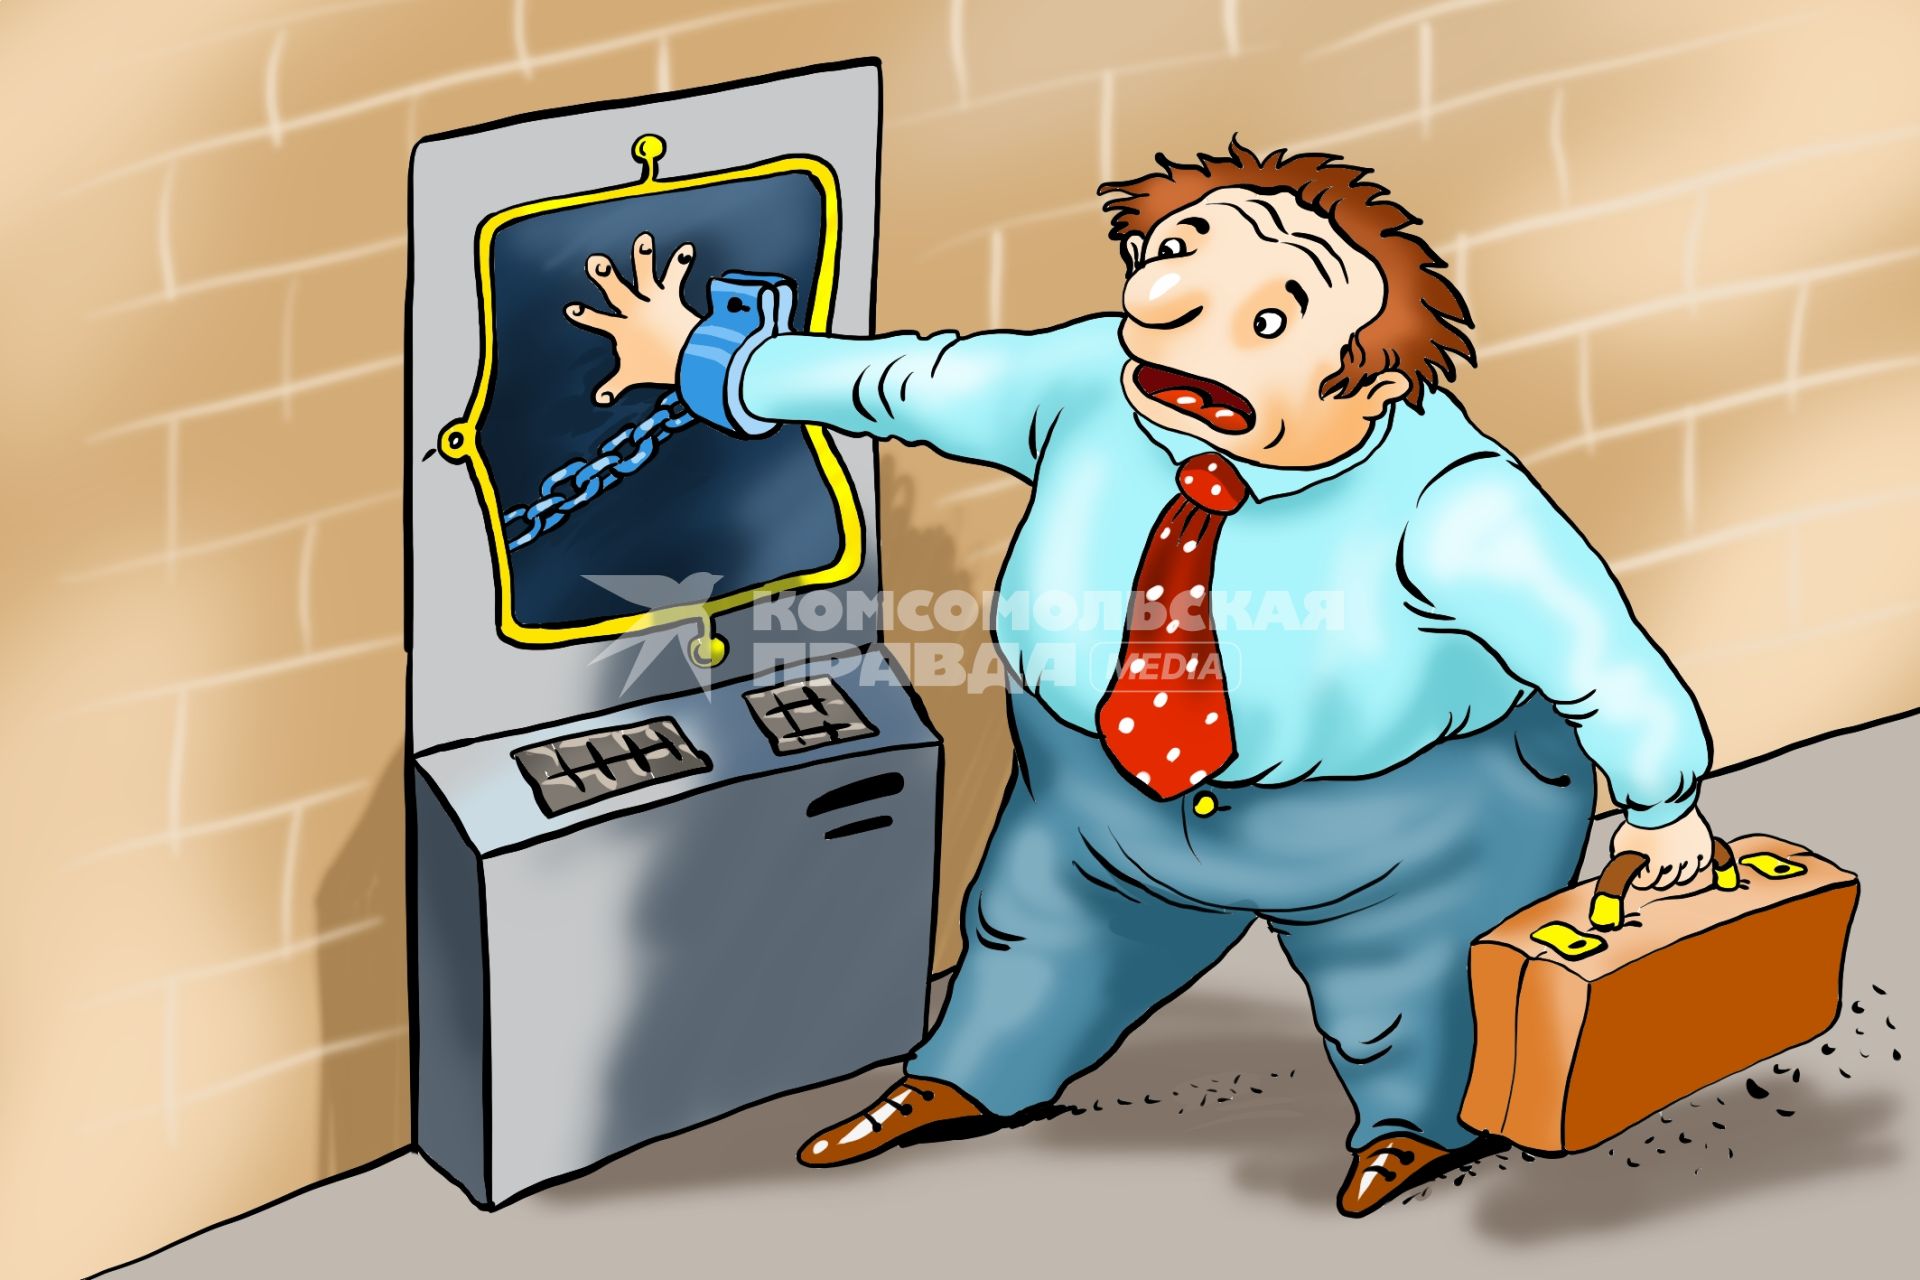 Карикатура на тему блокировки счетов вкладчиков.